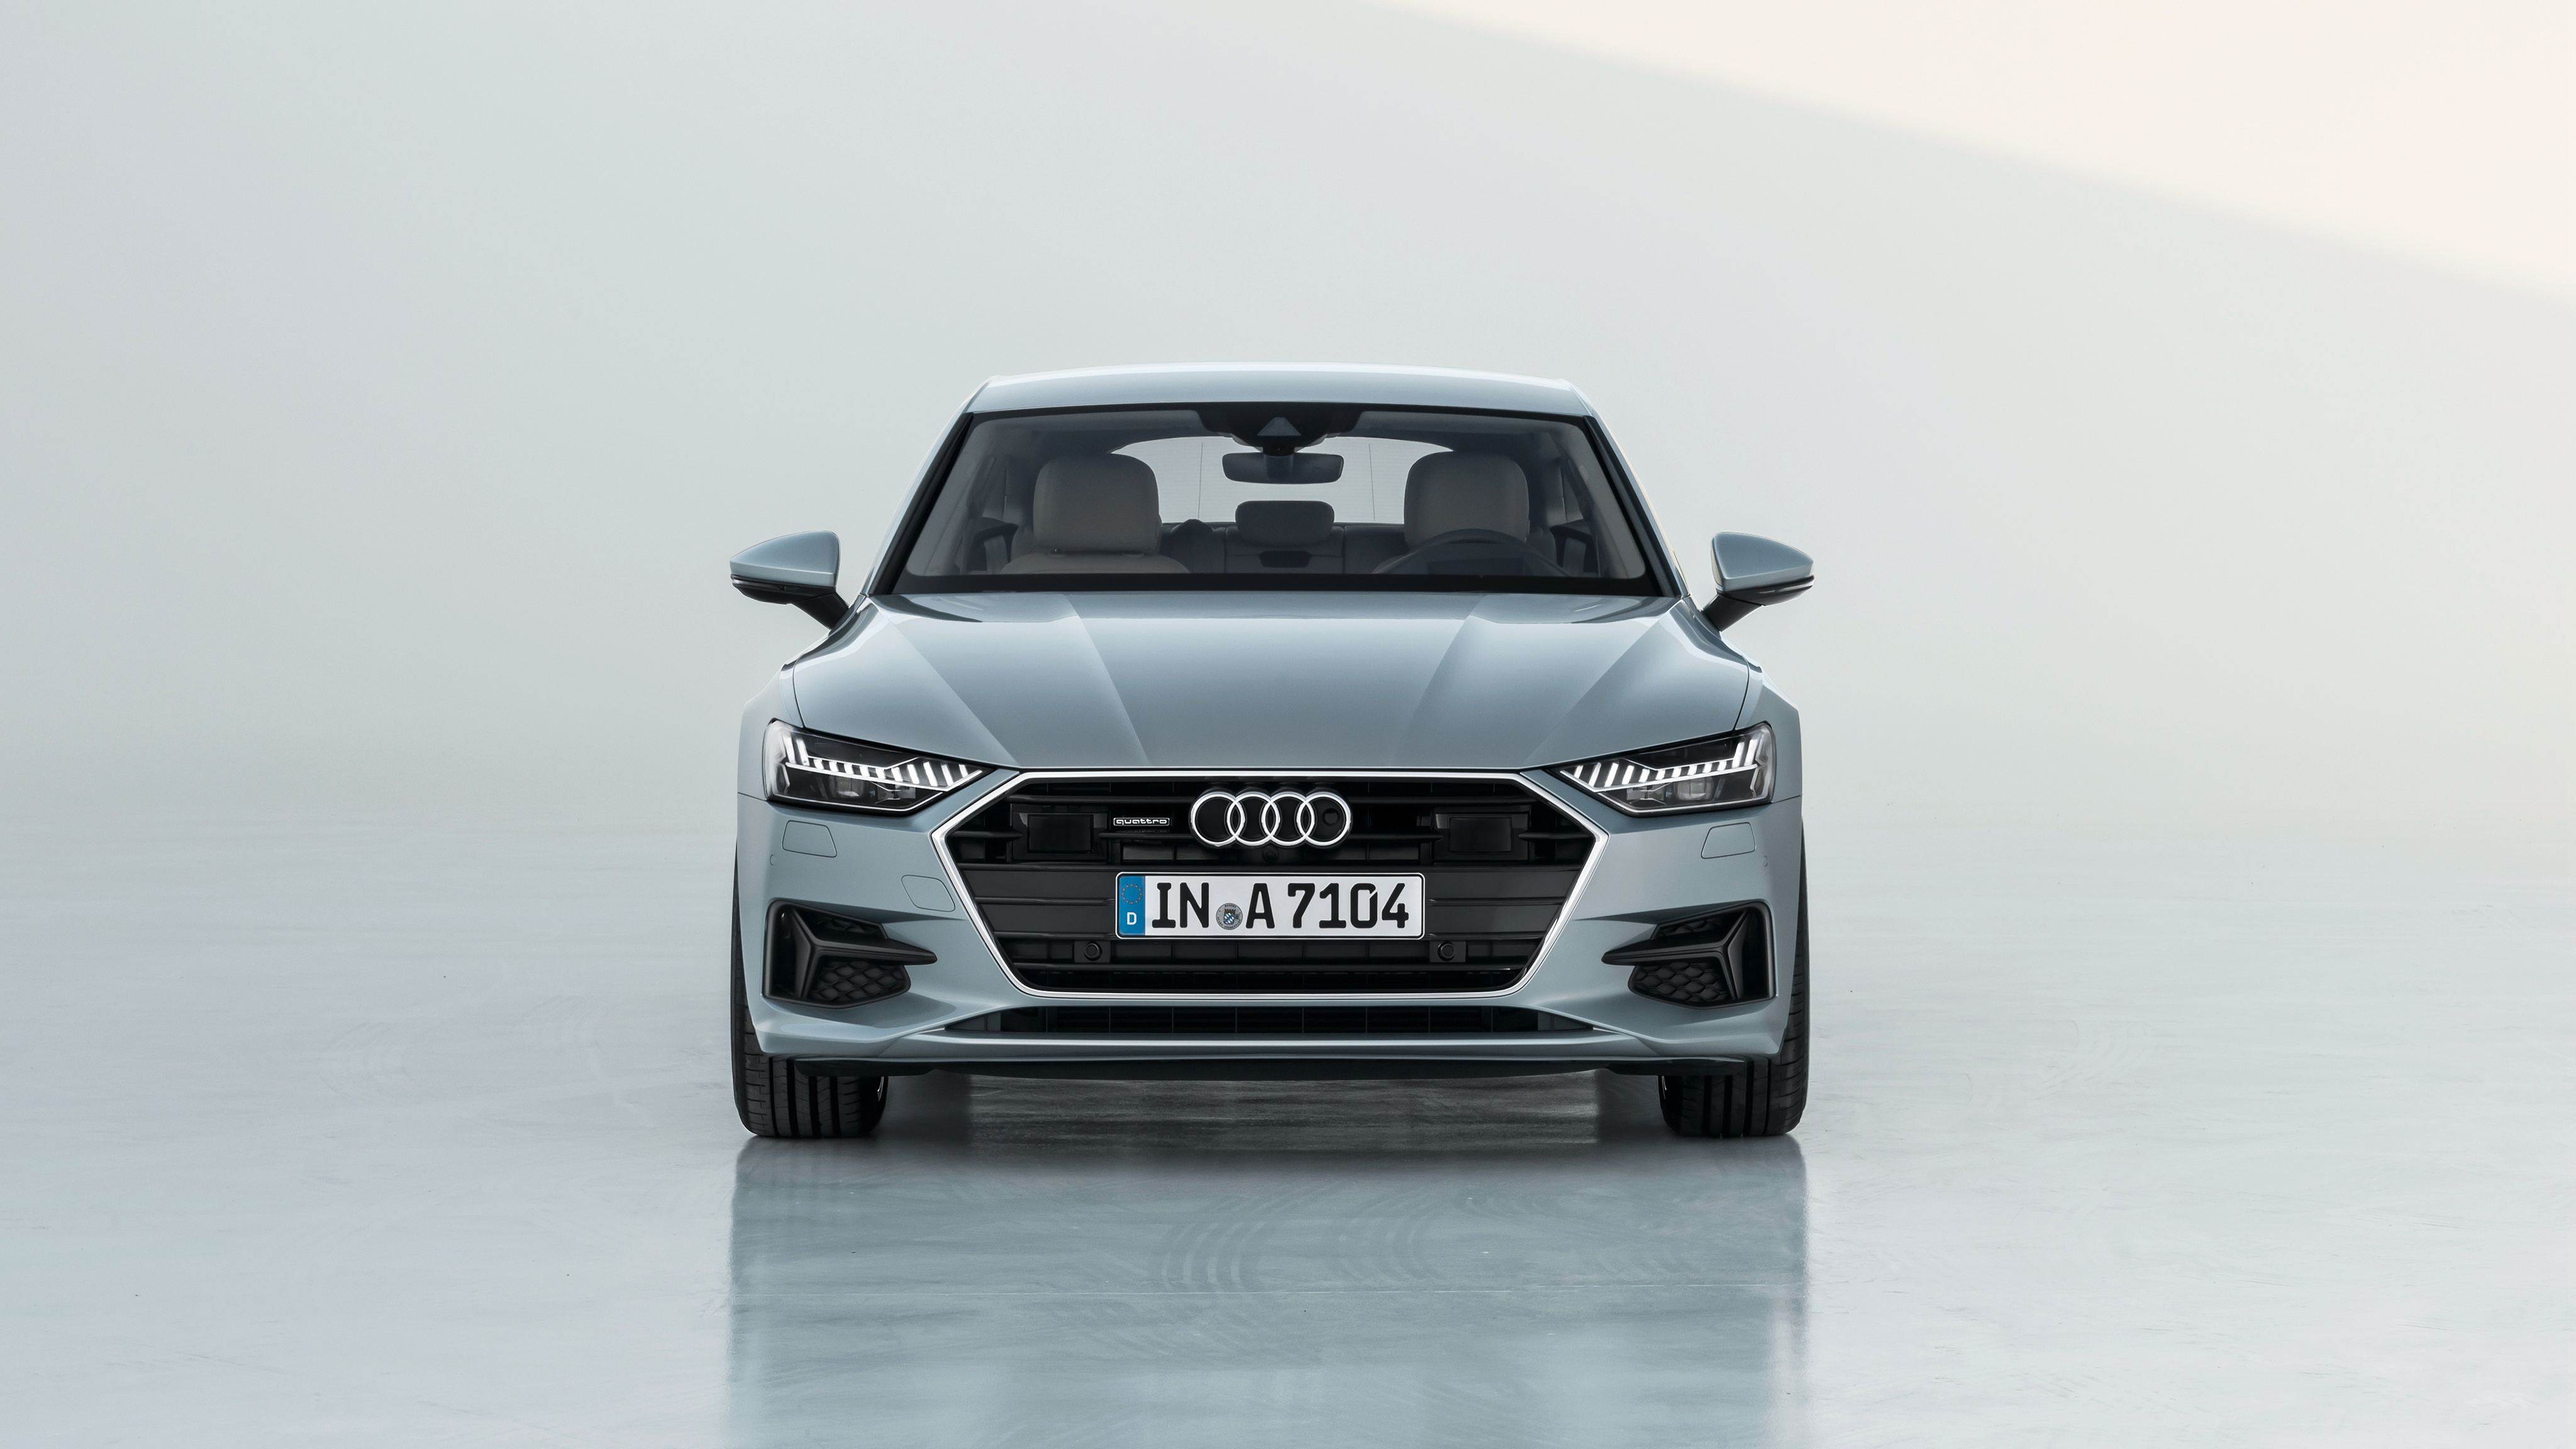 Audi A7 Sportback 2018 Front - HD Wallpaper 